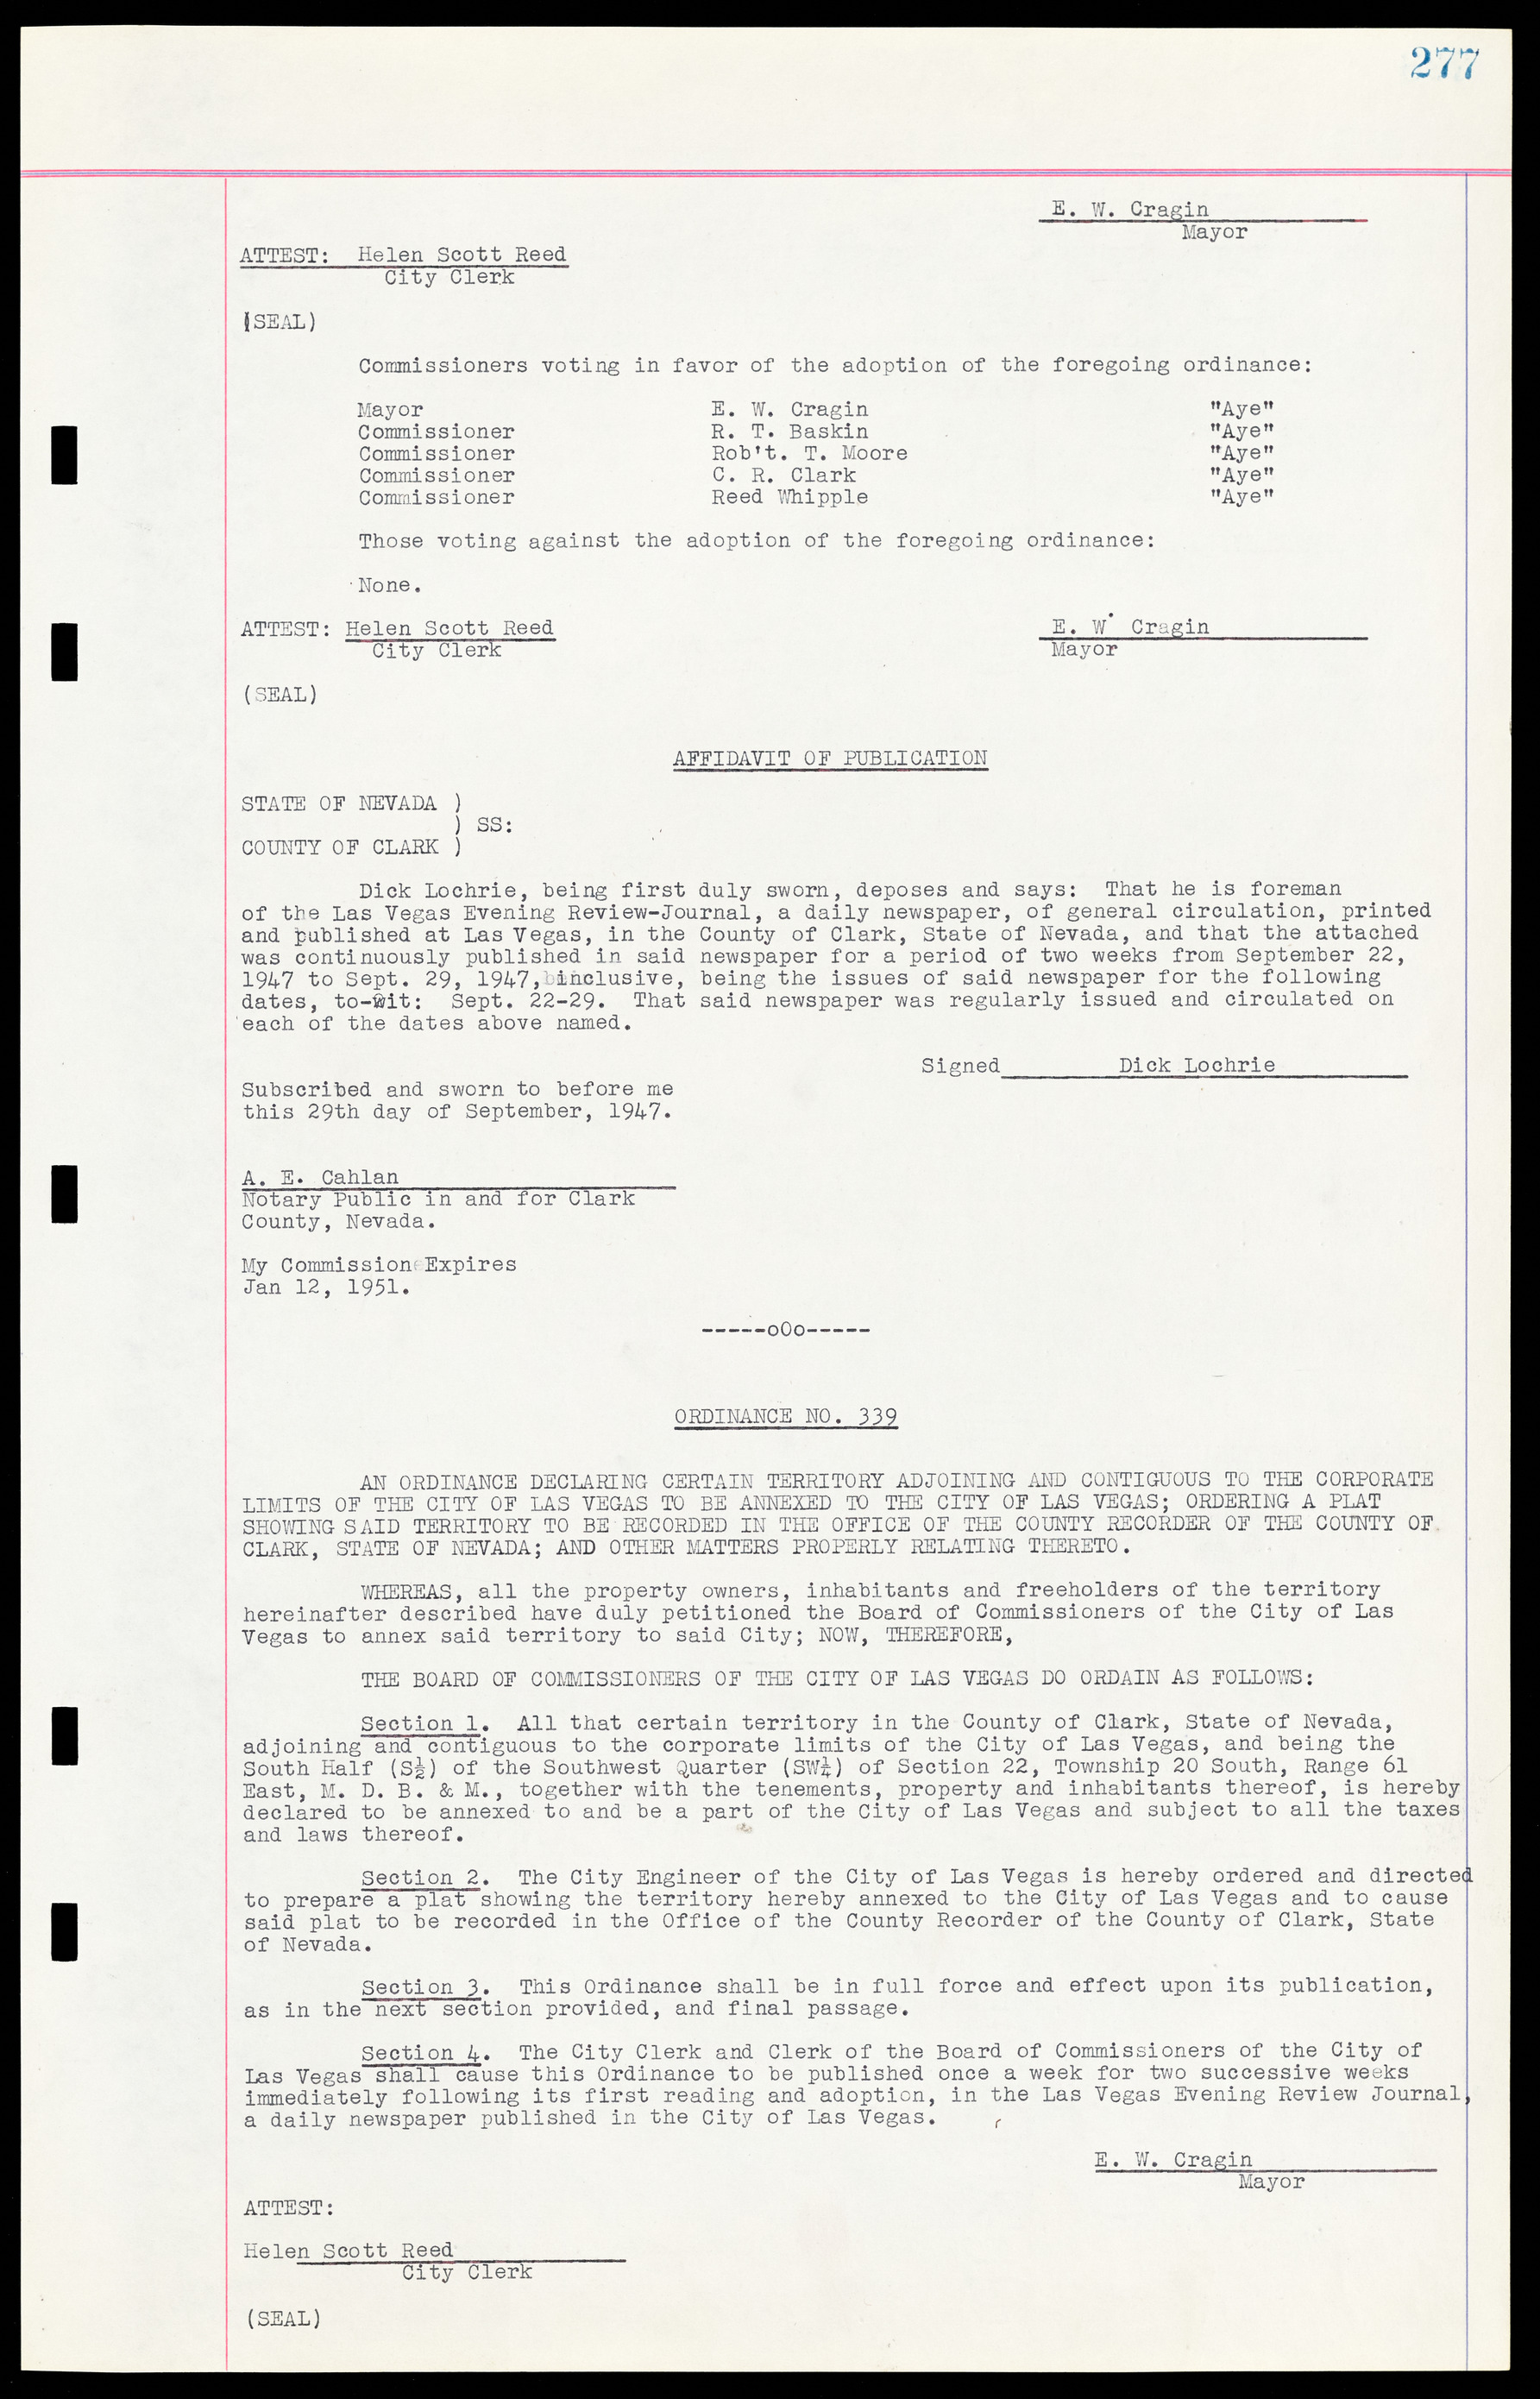 Las Vegas City Ordinances, March 31, 1933 to October 25, 1950, lvc000014-306